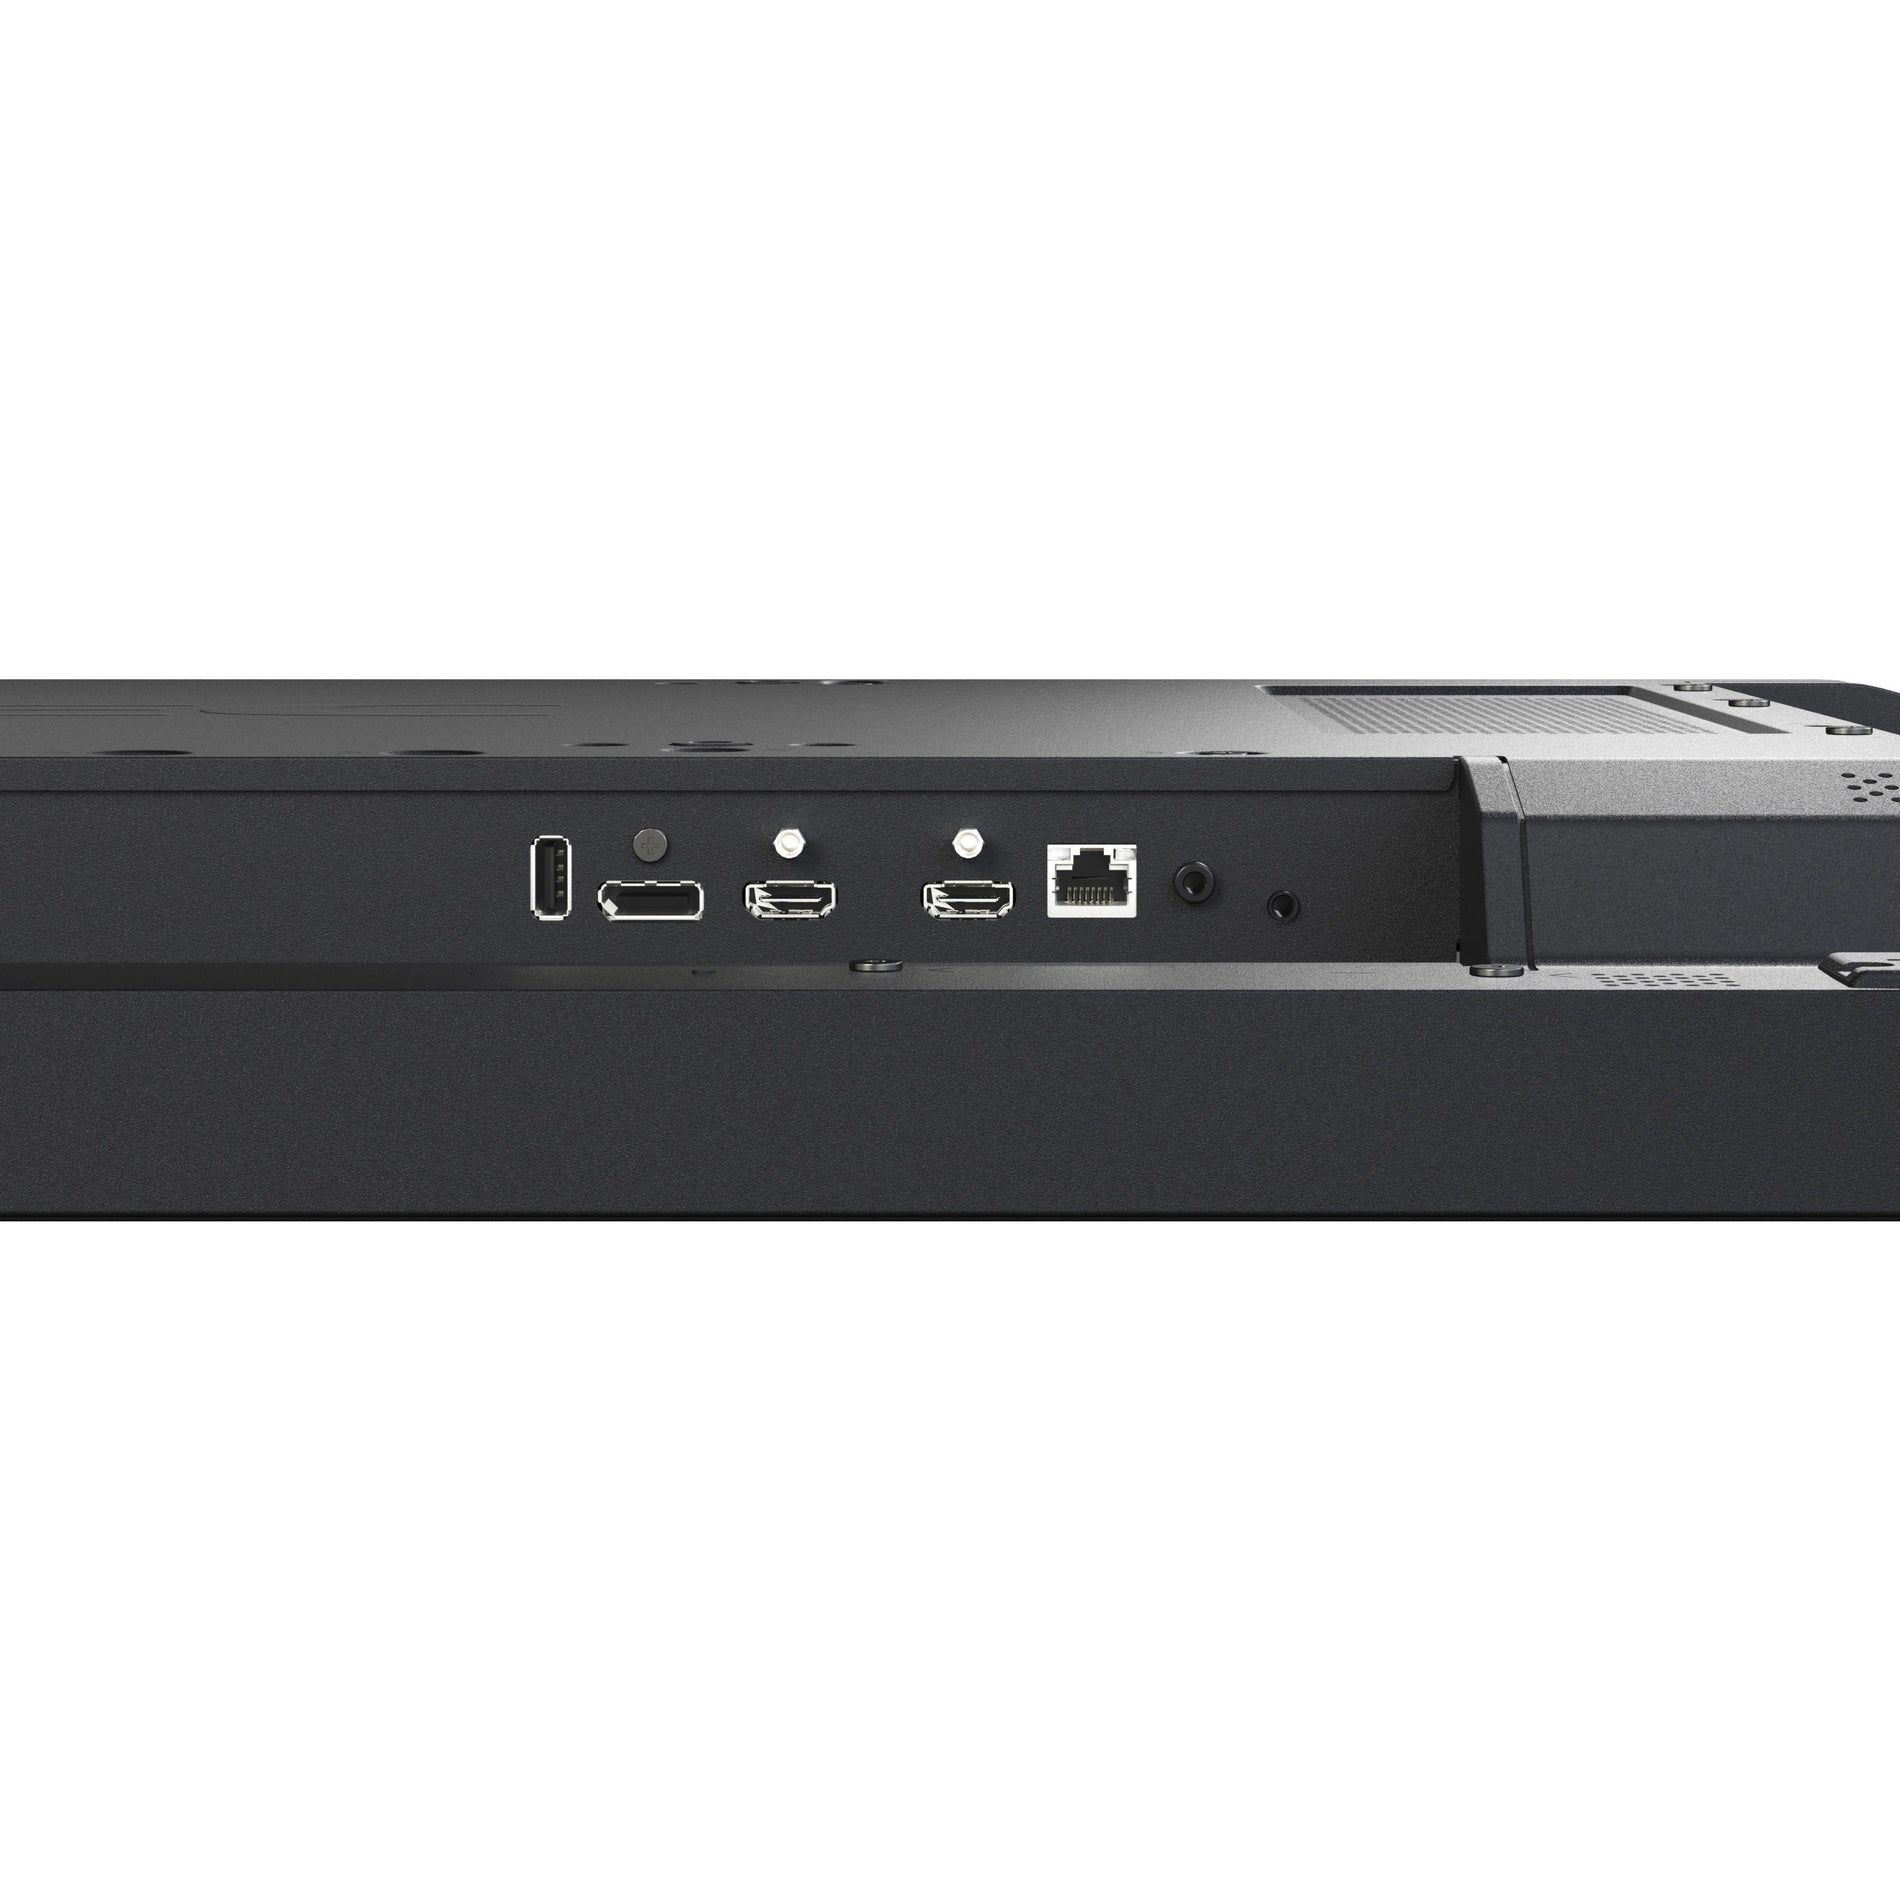 NEC Display M491 49" Ultra High Definition Professional Display, 500 Nit, 8-bit+FRC, 2160p, 3 Year Warranty, ENERGY STAR 8.0